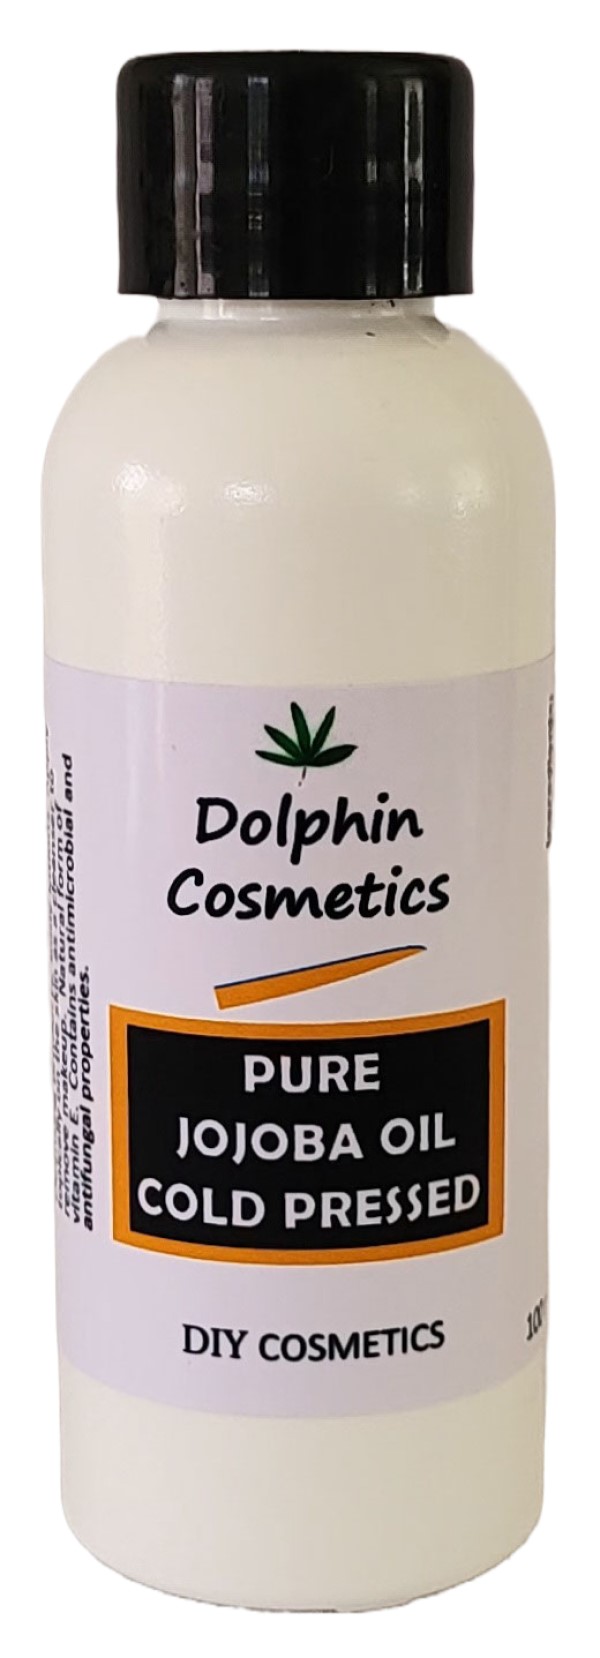 dolphin-cosmetics-jojoba-oil-cold-pressed-